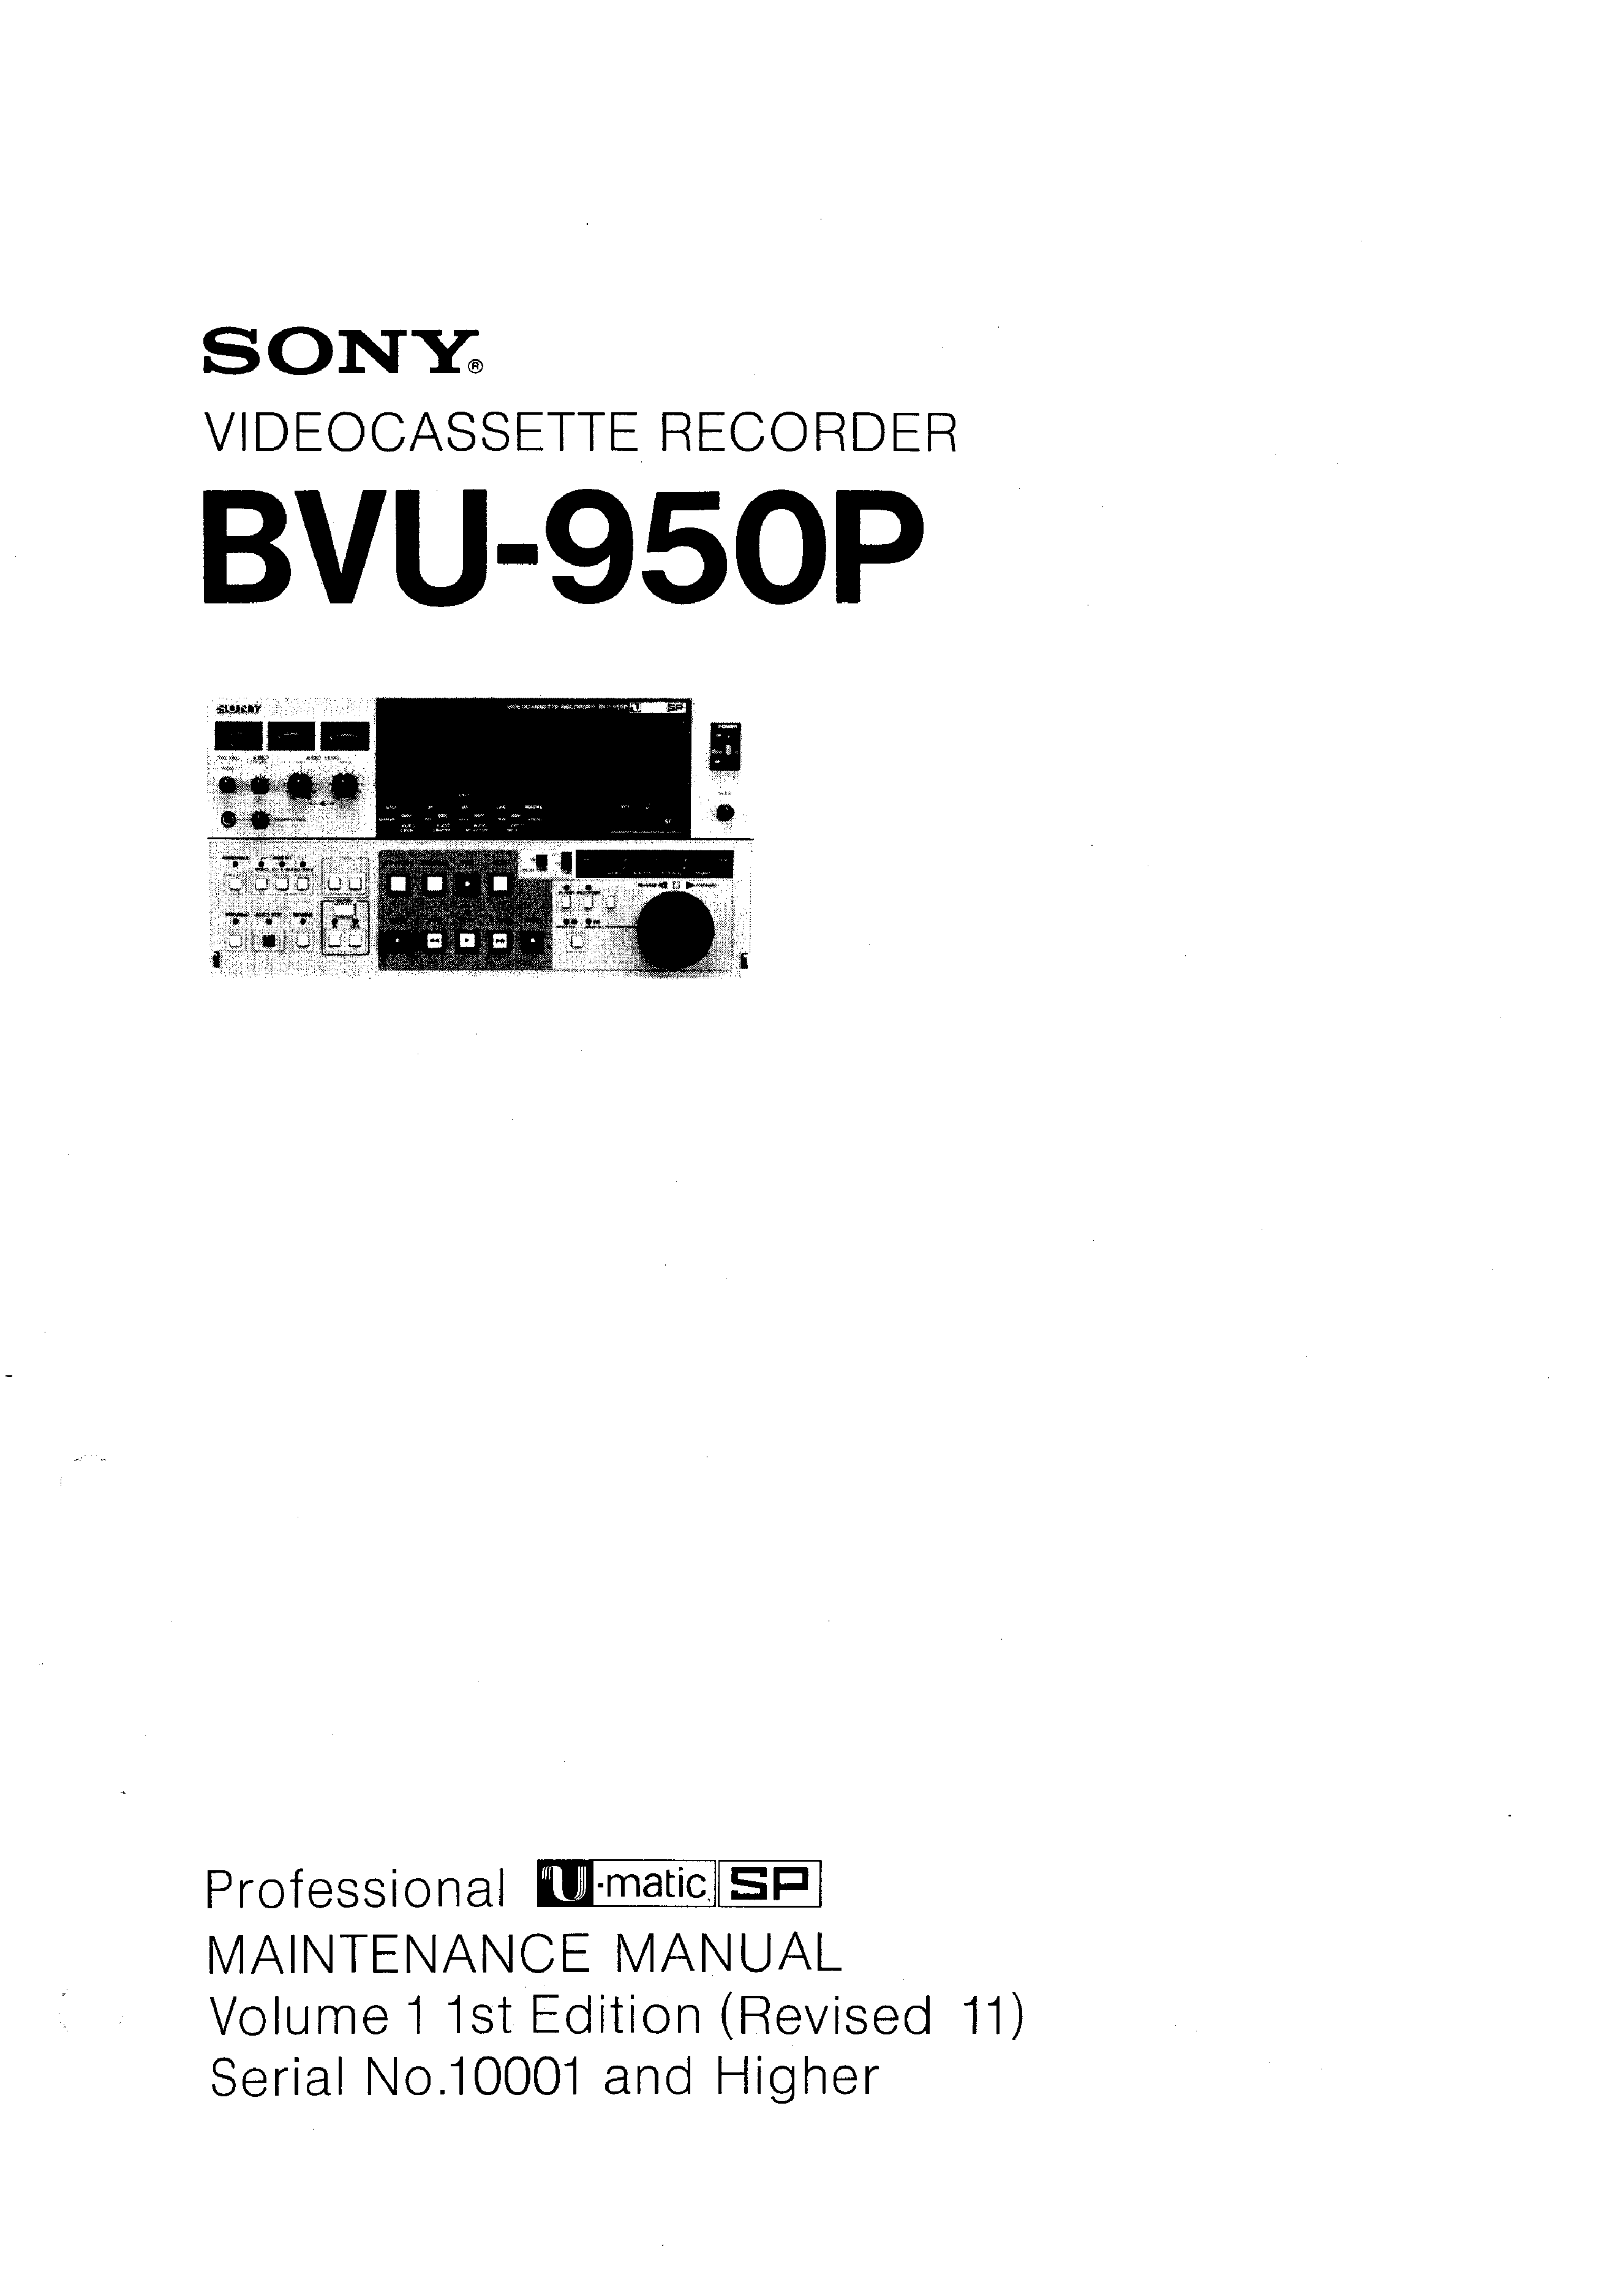 Bvu-950 manual